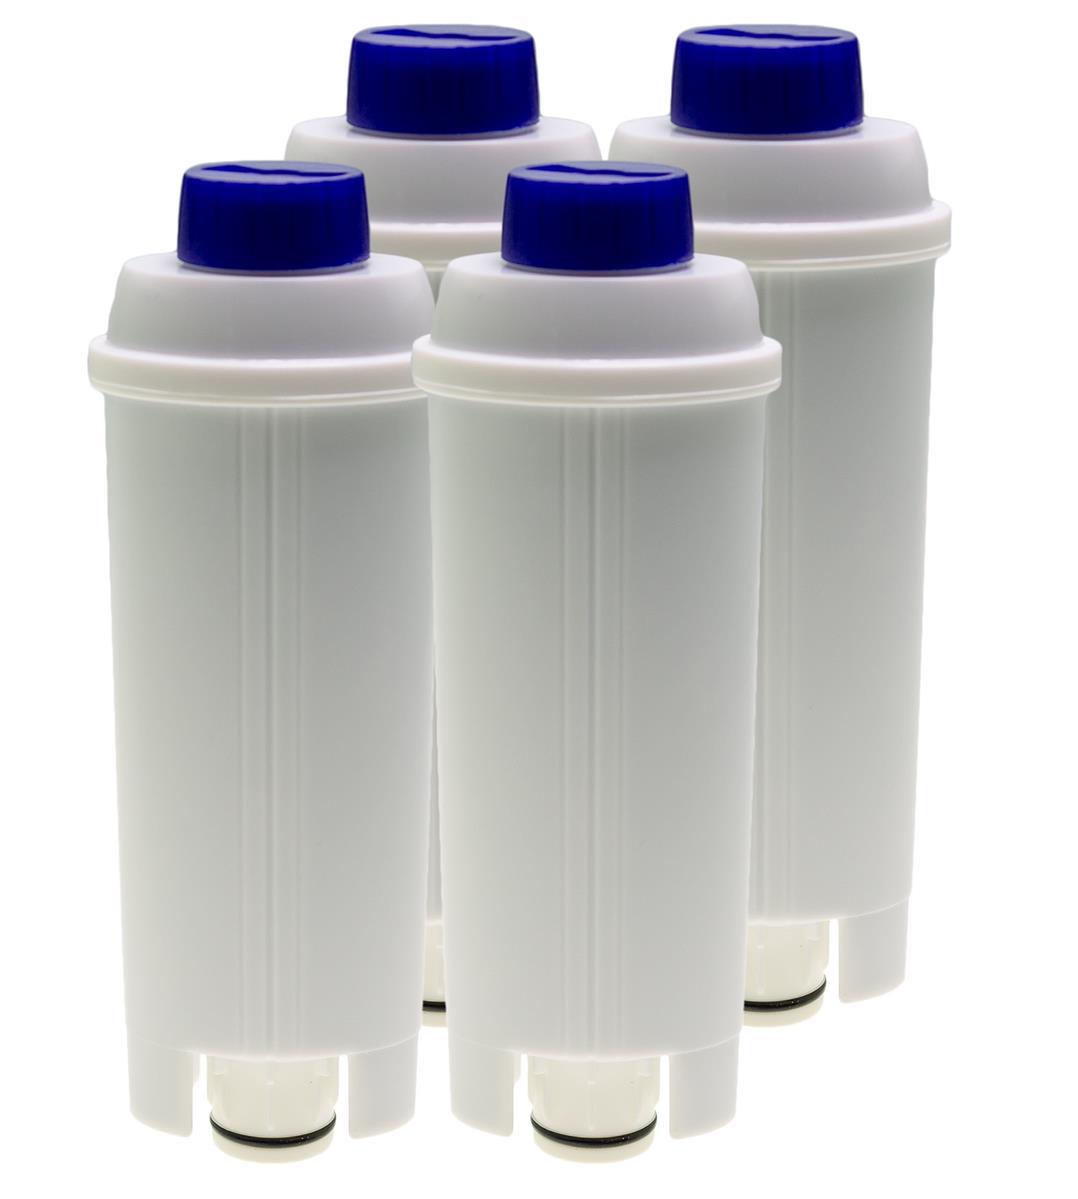 4 Stück Filterpatronen Wasserfilter Filter DeLonghi Autentica